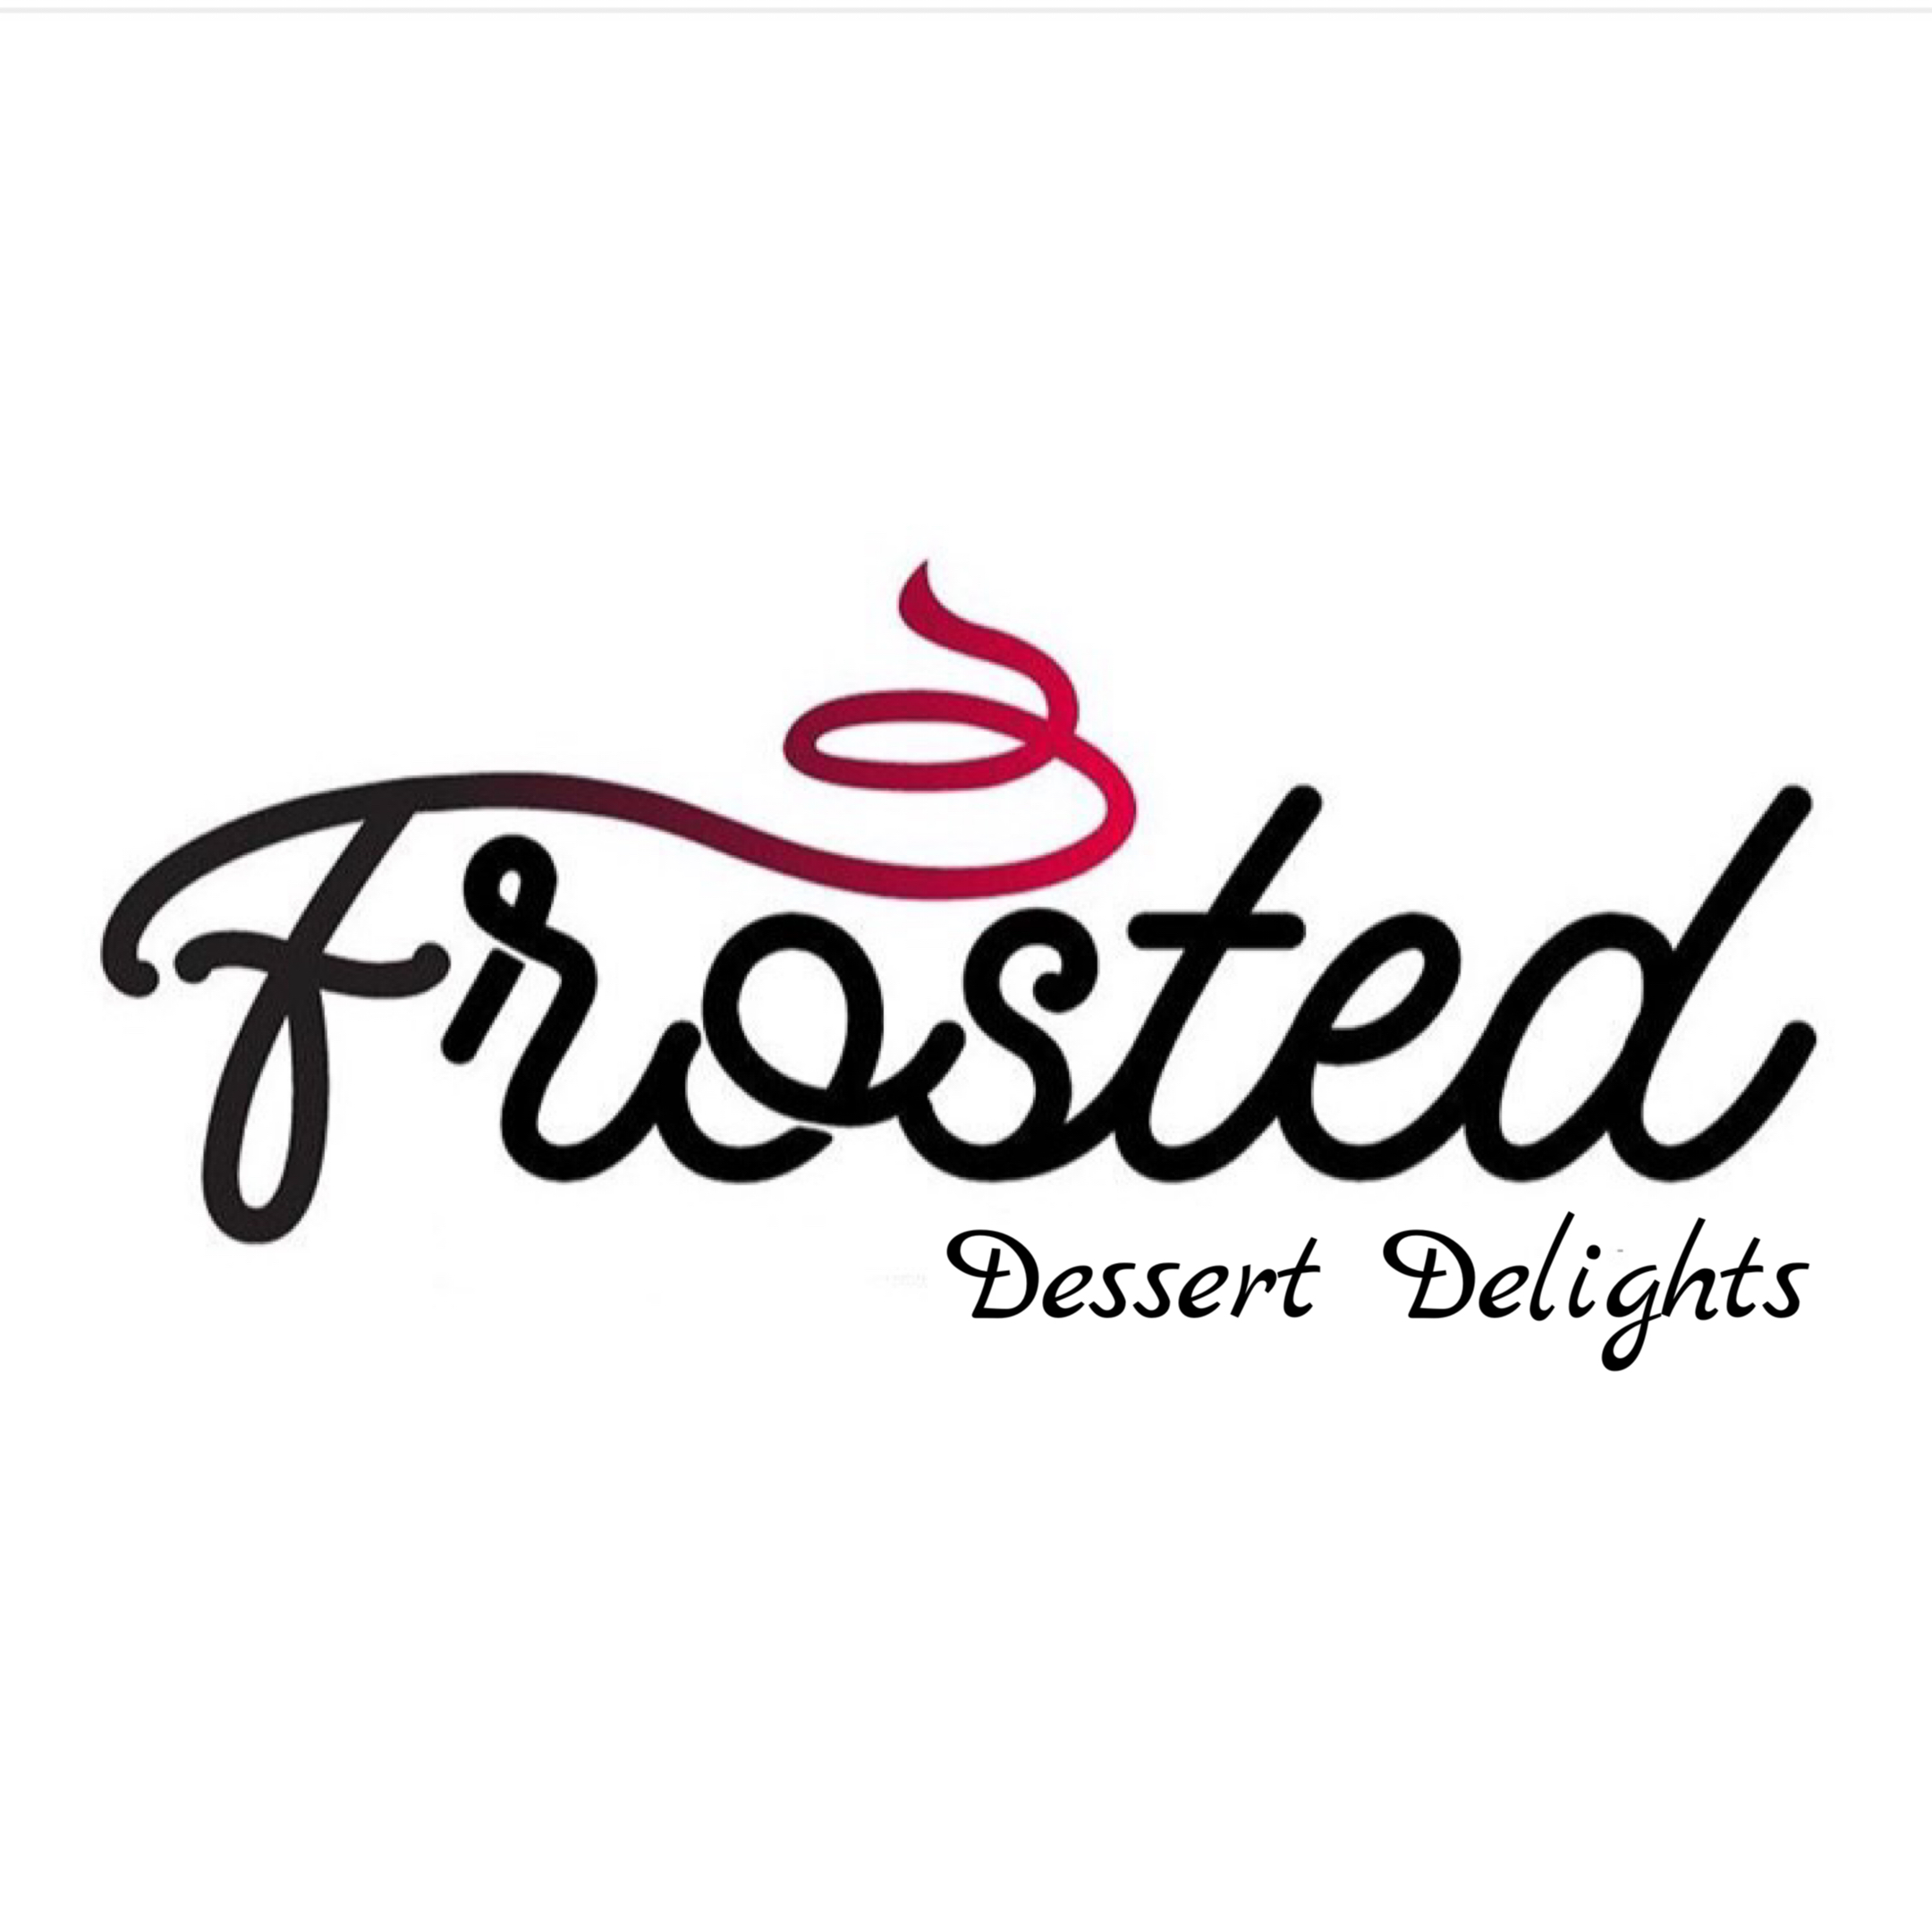 Frosted Dessert Delights-logo.jpg